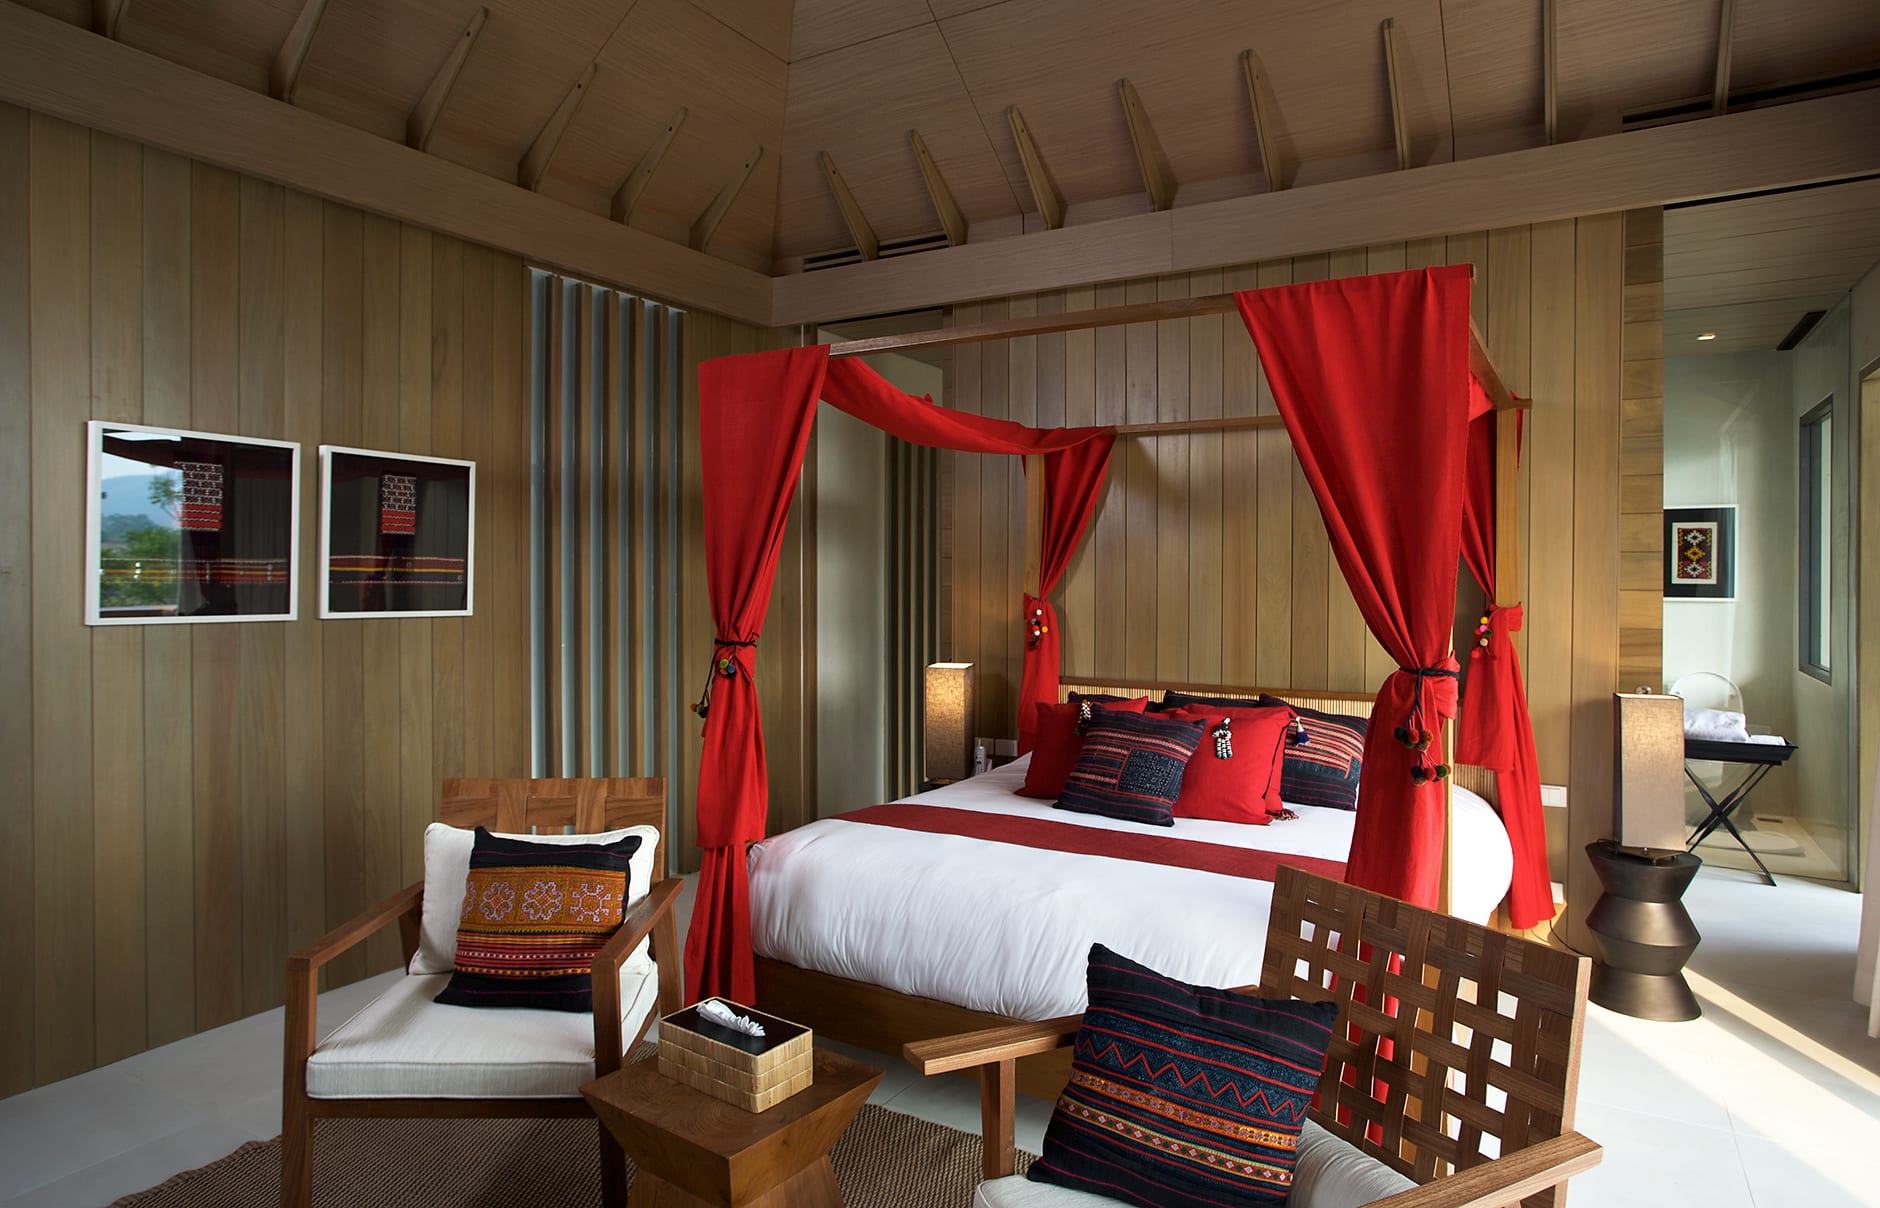 Pool Villa. Veranda High Resort Chiang Mai, Thailand. Hotel Review by TravelPlusStyle. Photo © AccorHotels 